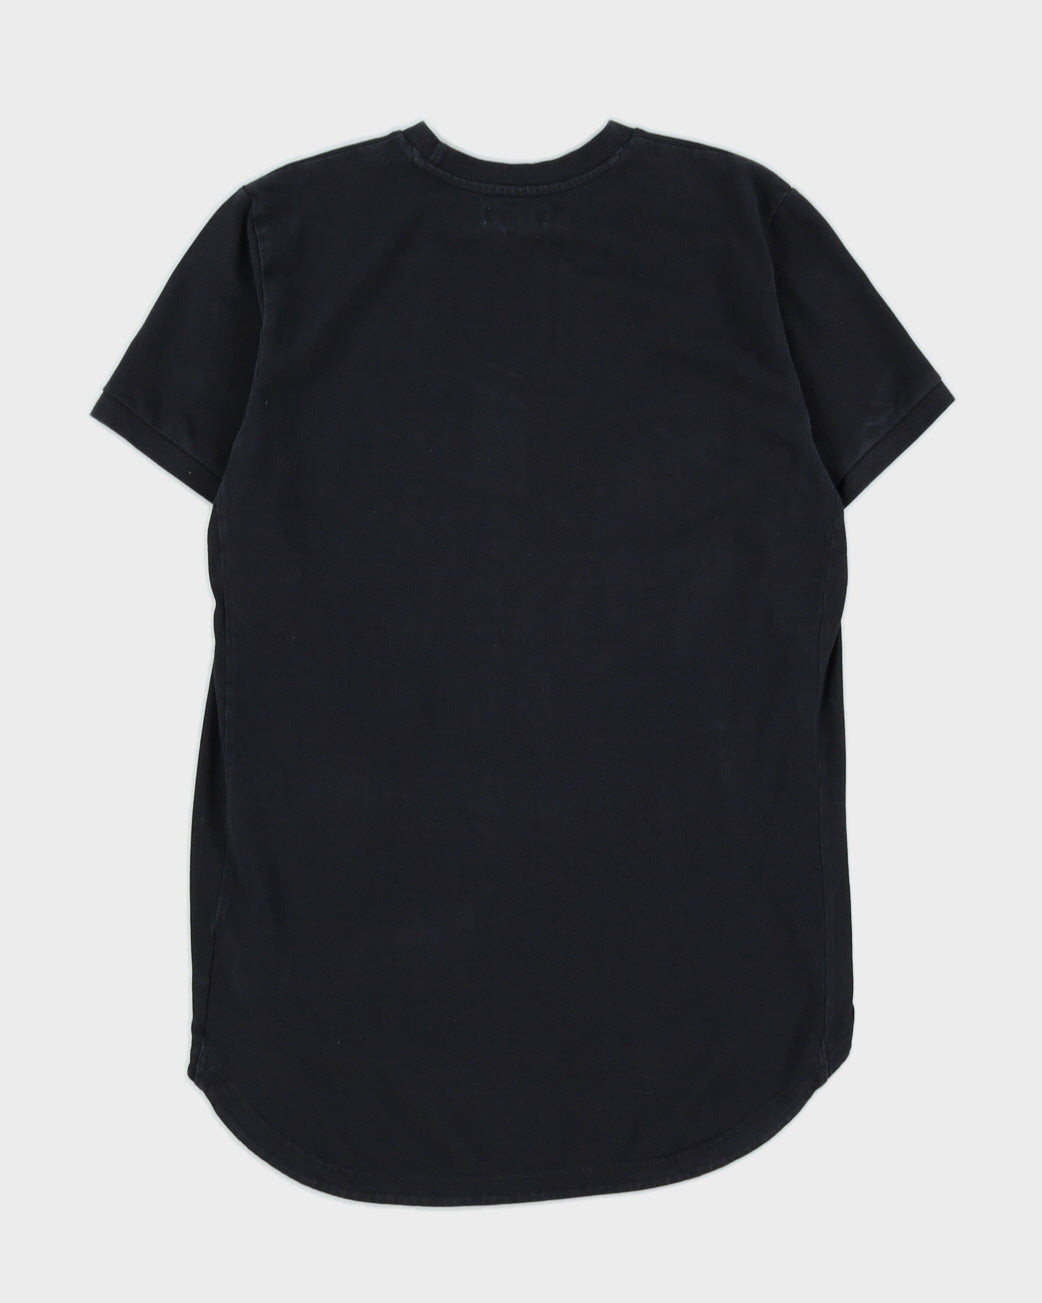 Adidas Black Graphic T-Shirt - XL